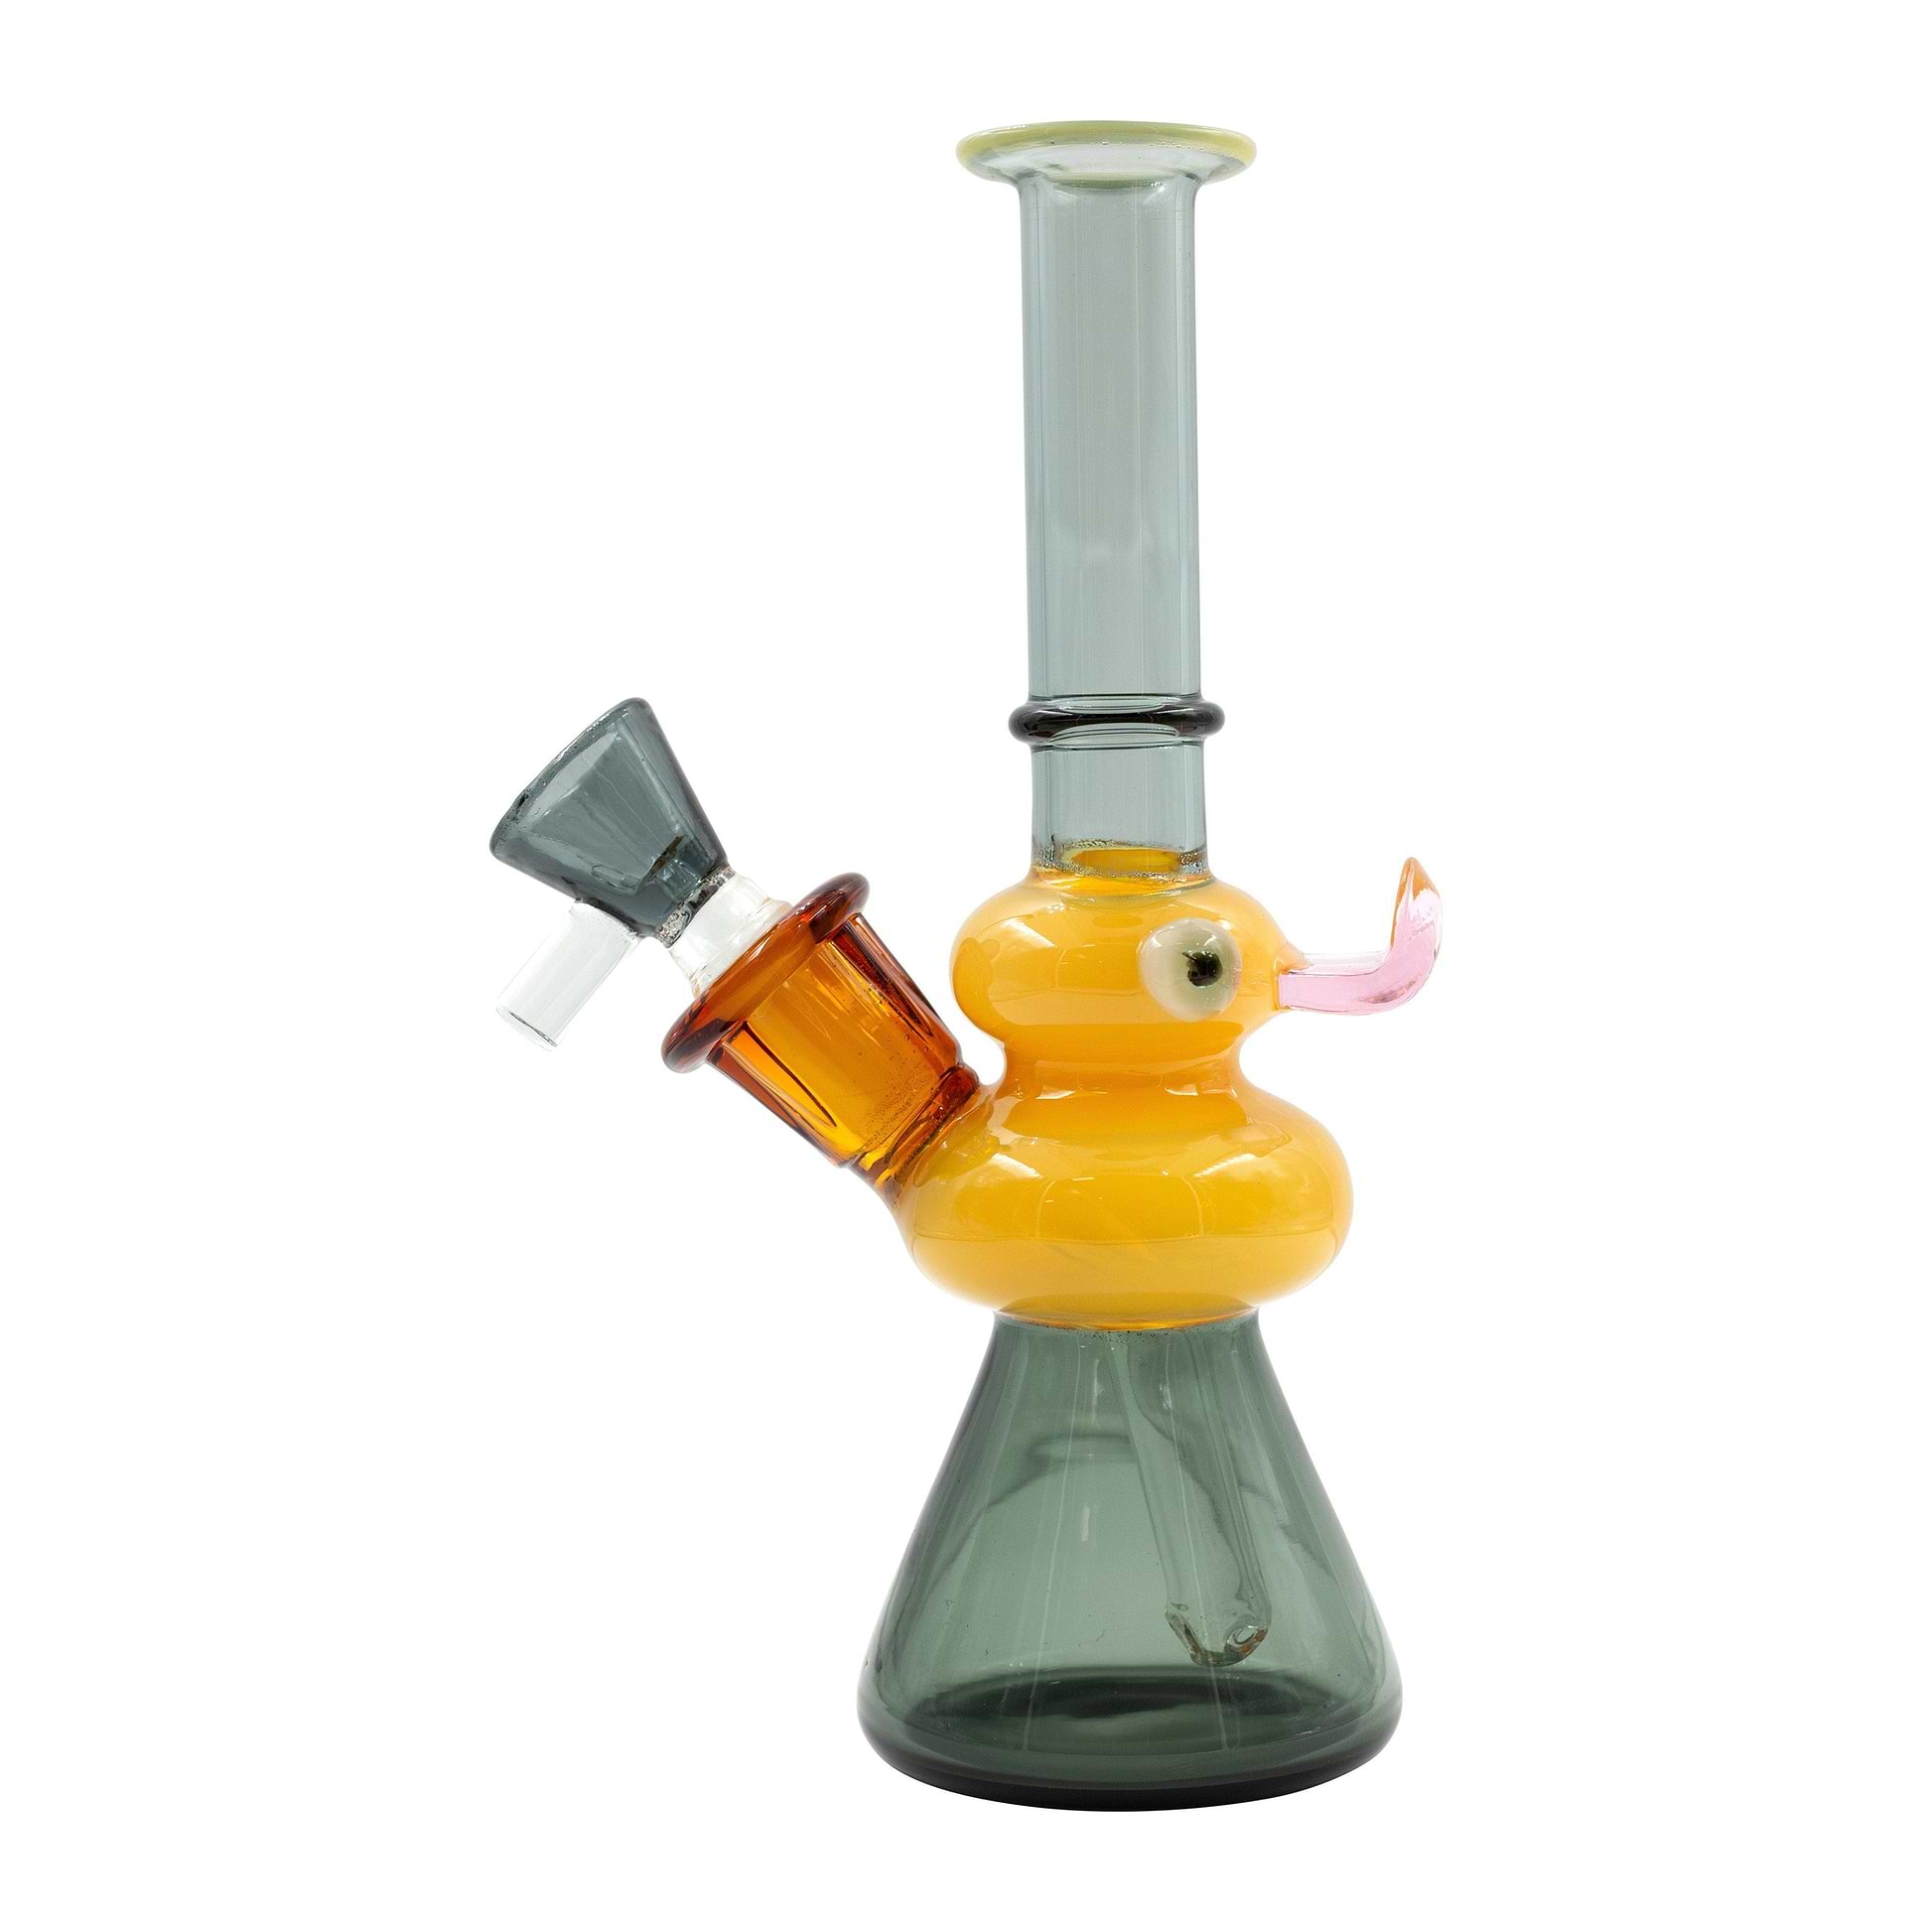 Portable 6.5-inch glass beaker bong with downstem splashguard in cute duck design